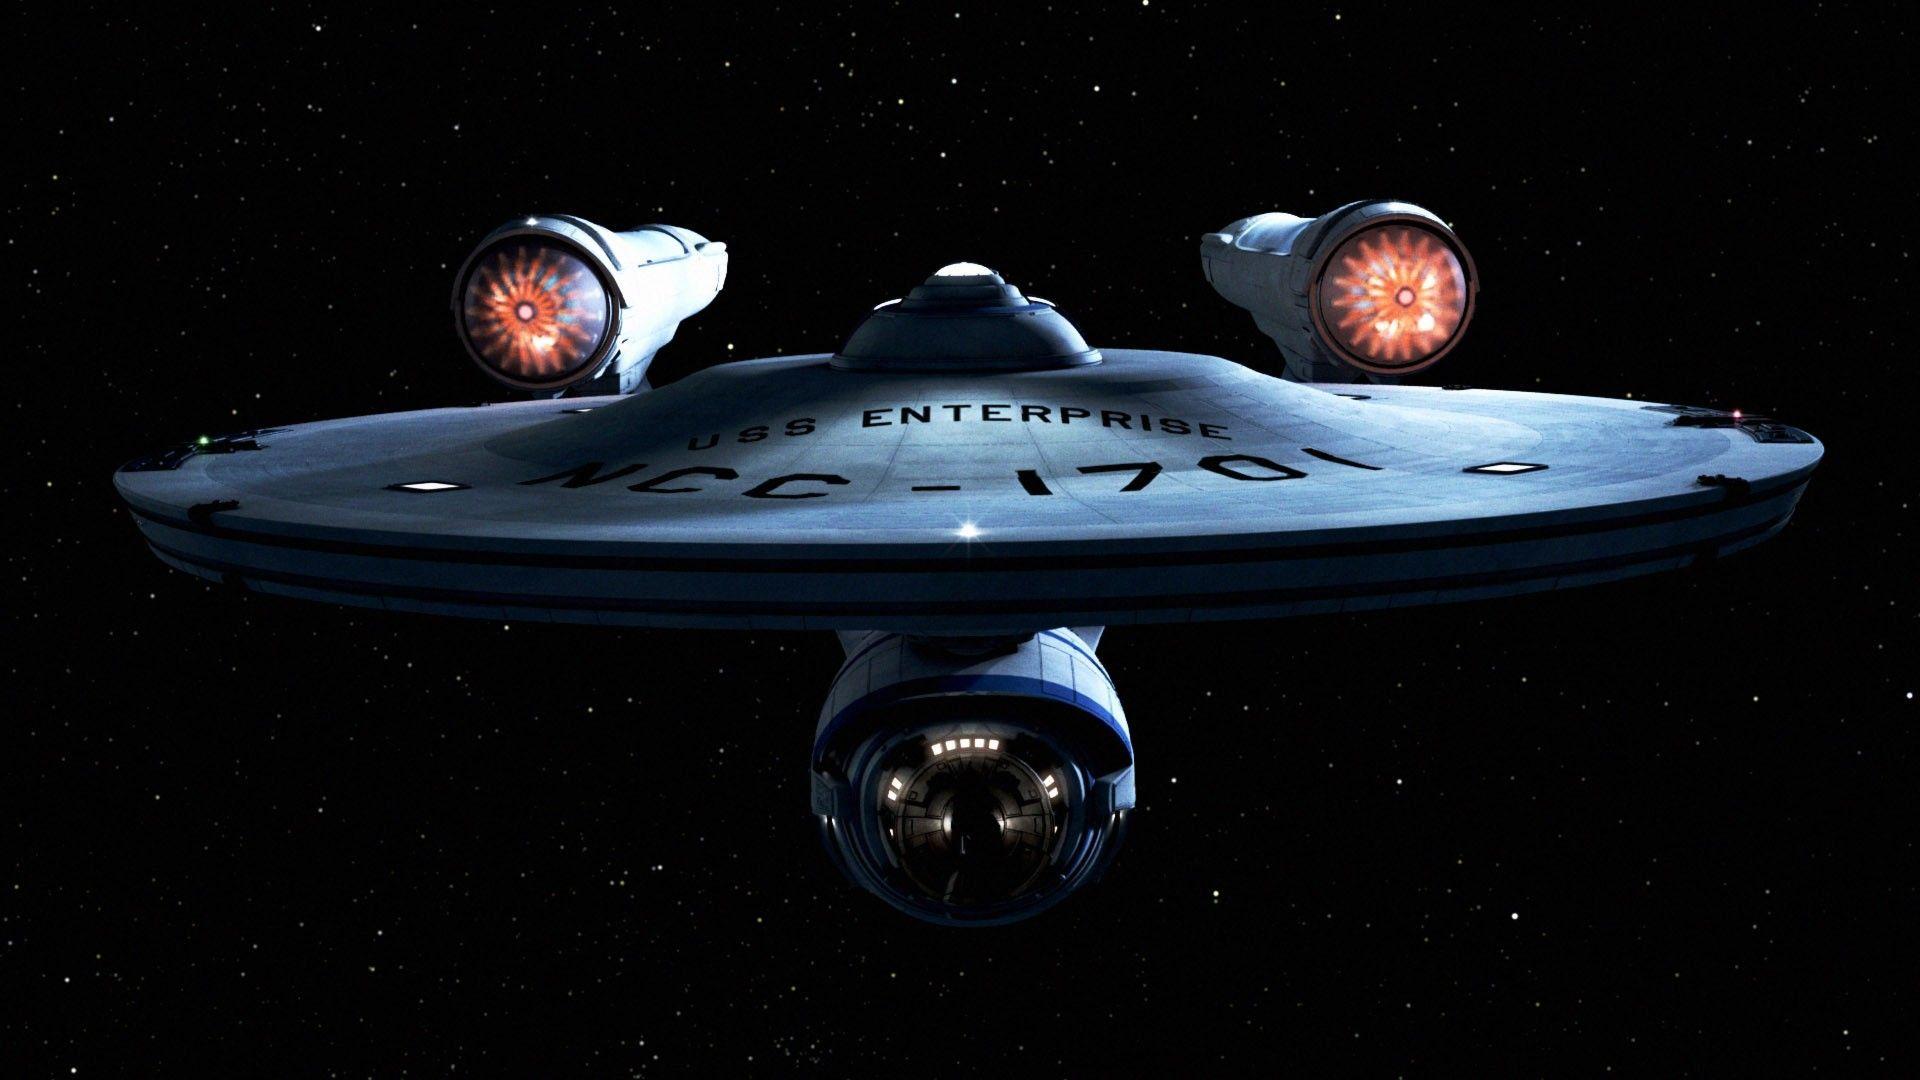 Enterprise Star Trek Uss Enterprise Spaceships 177329 1920x1080